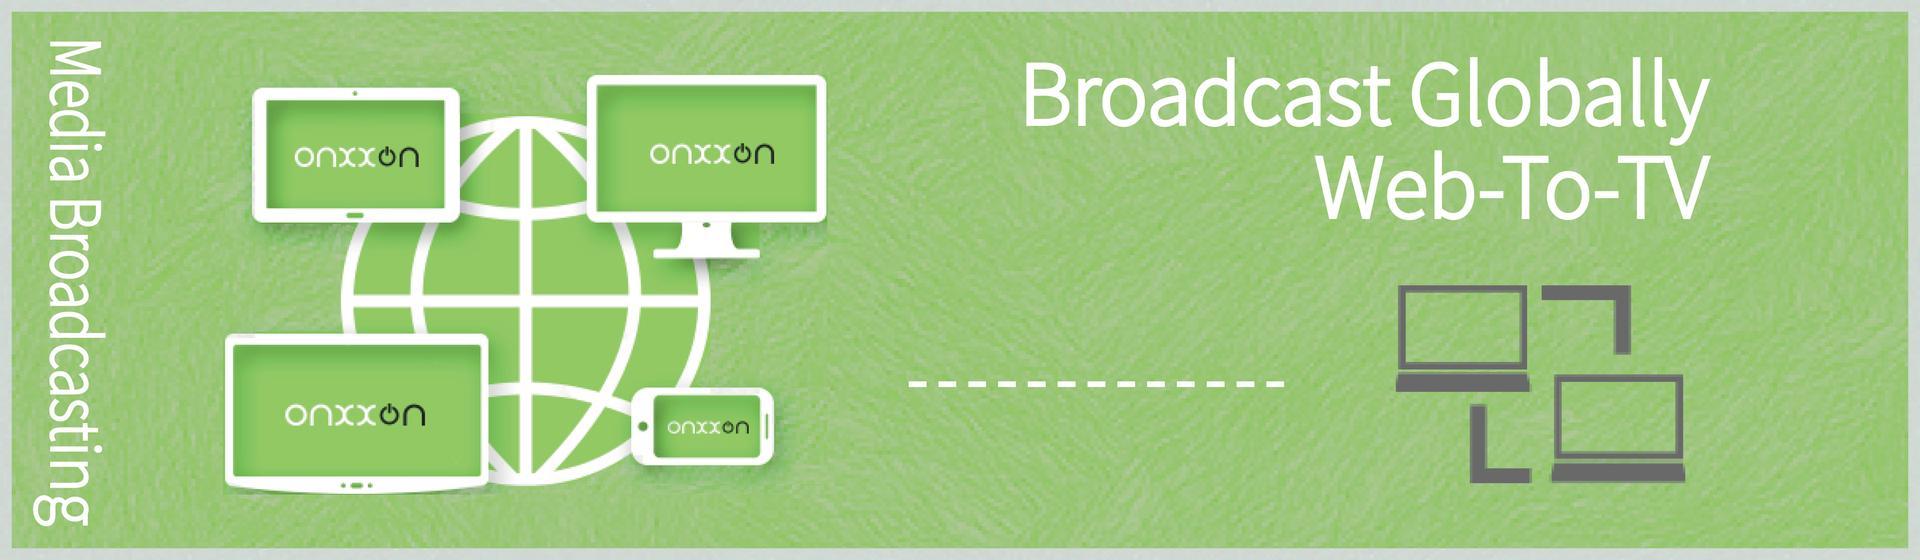 Onxxon Media Broadcasting, Web-to-TV, Digital Signage Android app